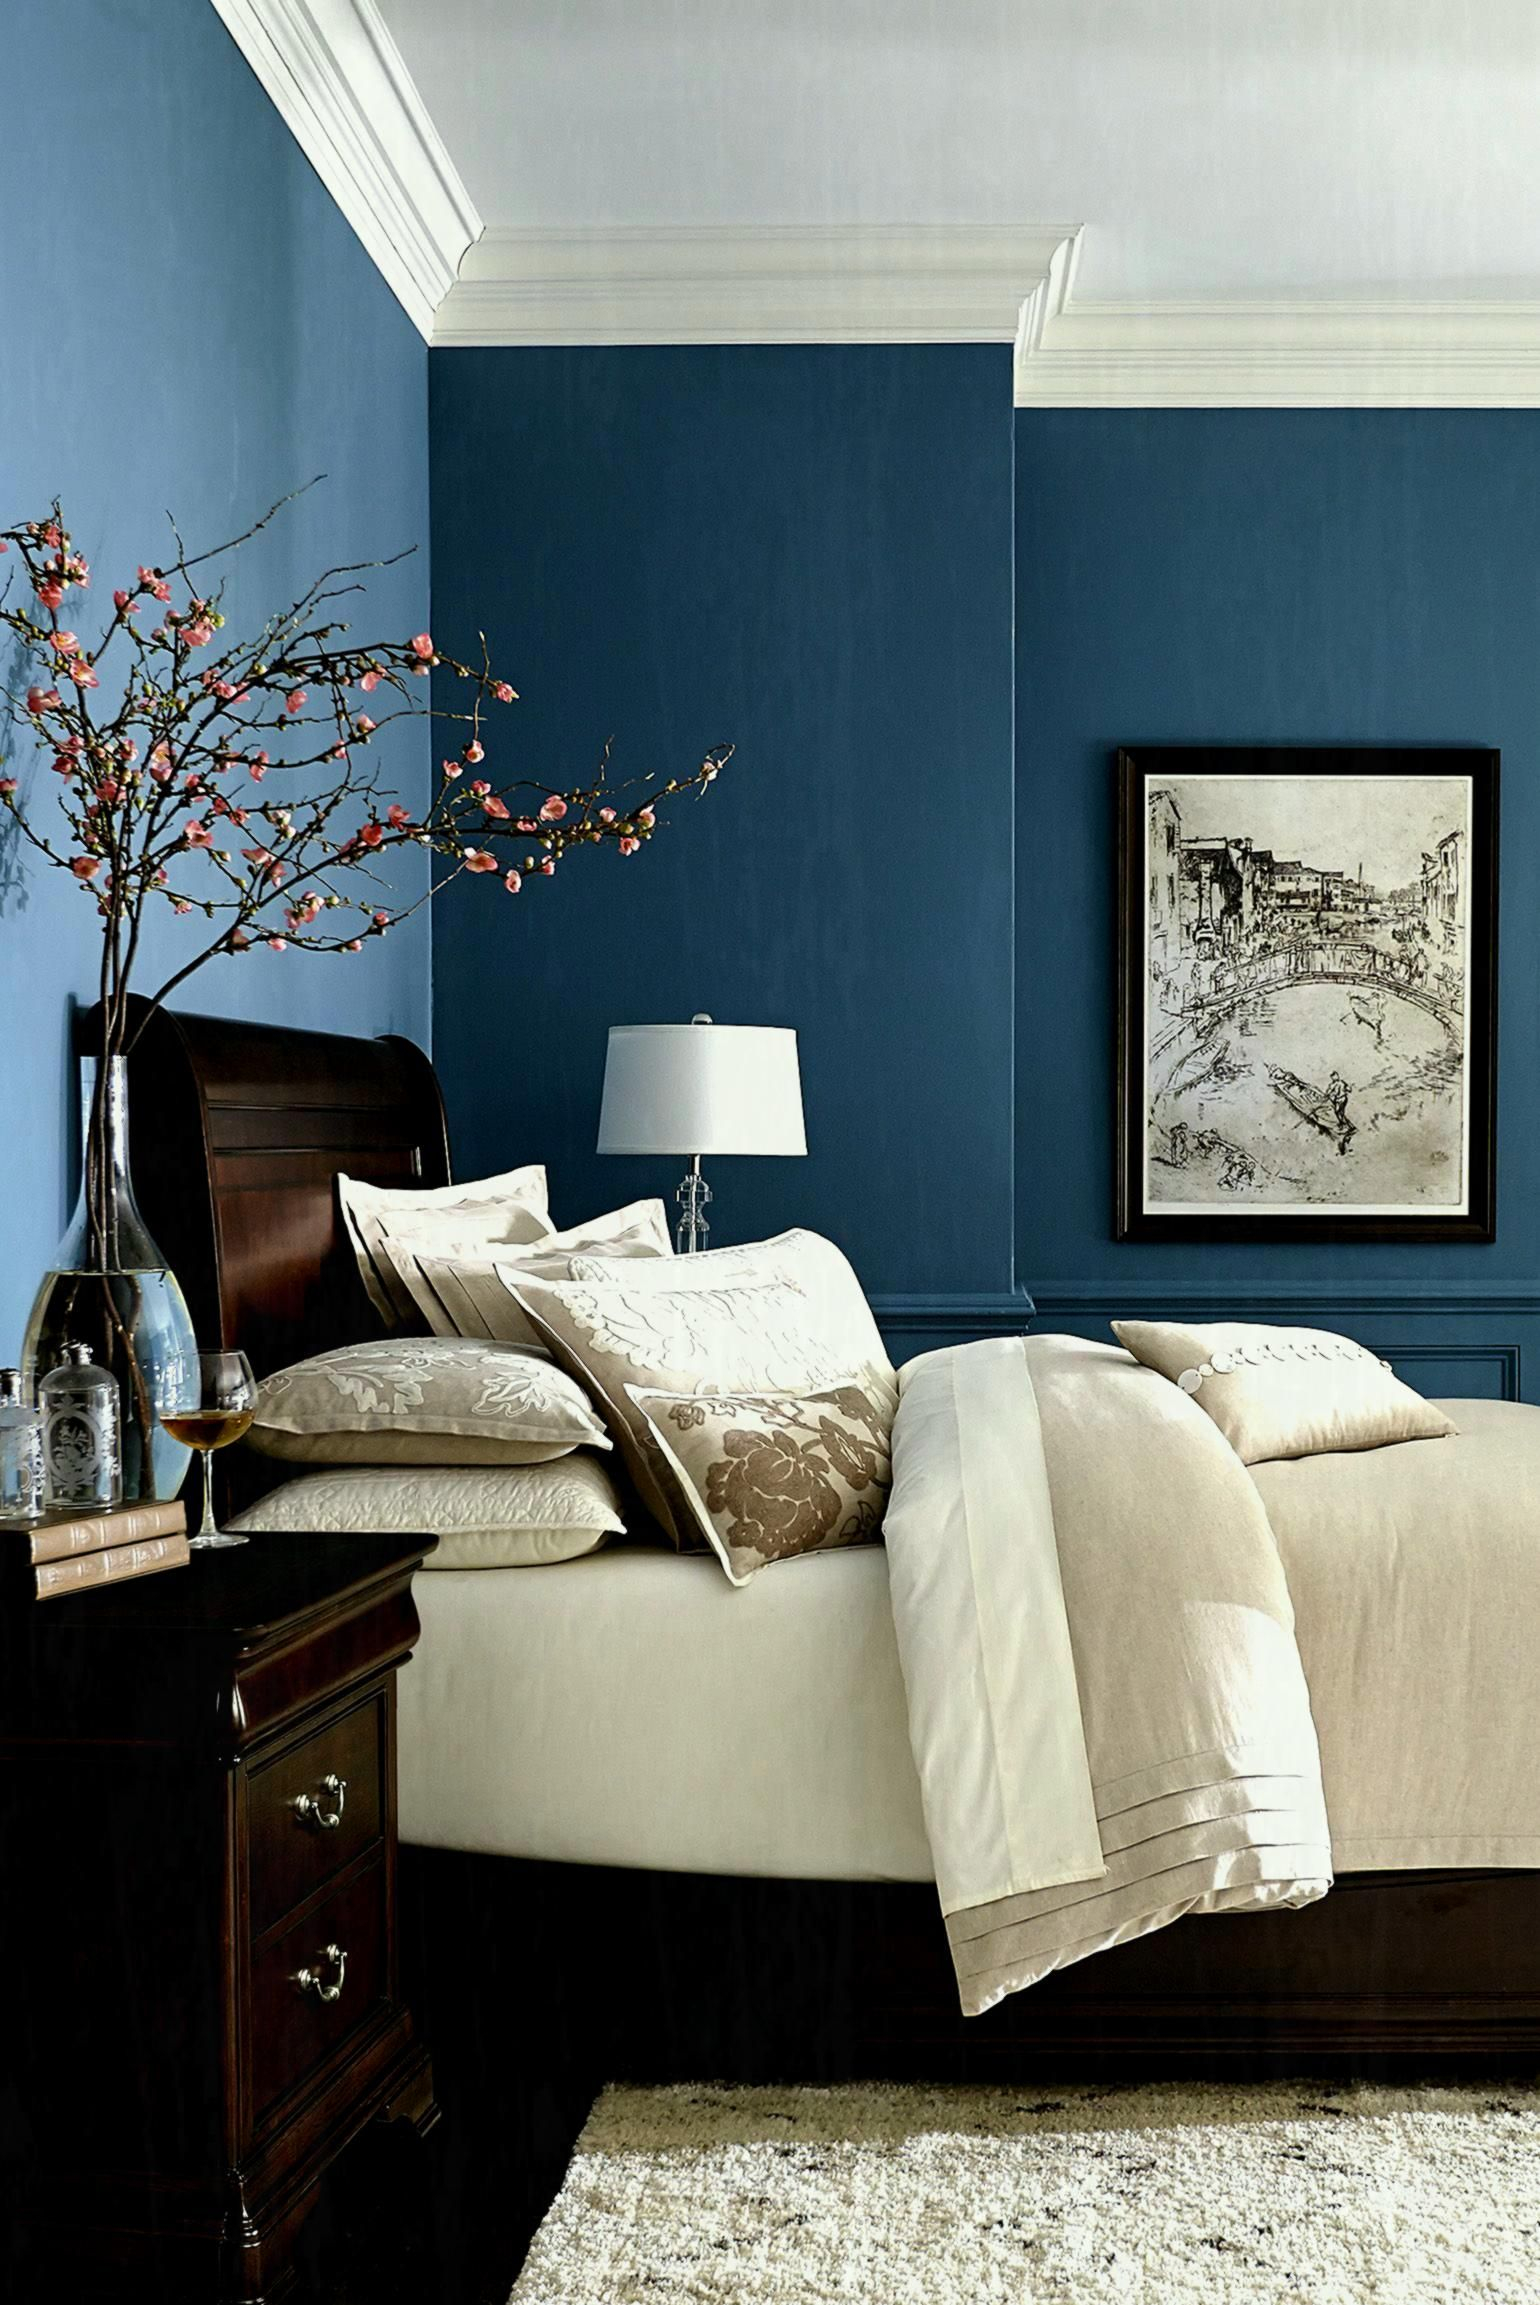 Bedroom Wall Color Schemes Interior Ideas On Design Zen Scheme Best regarding dimensions 1540 X 2305